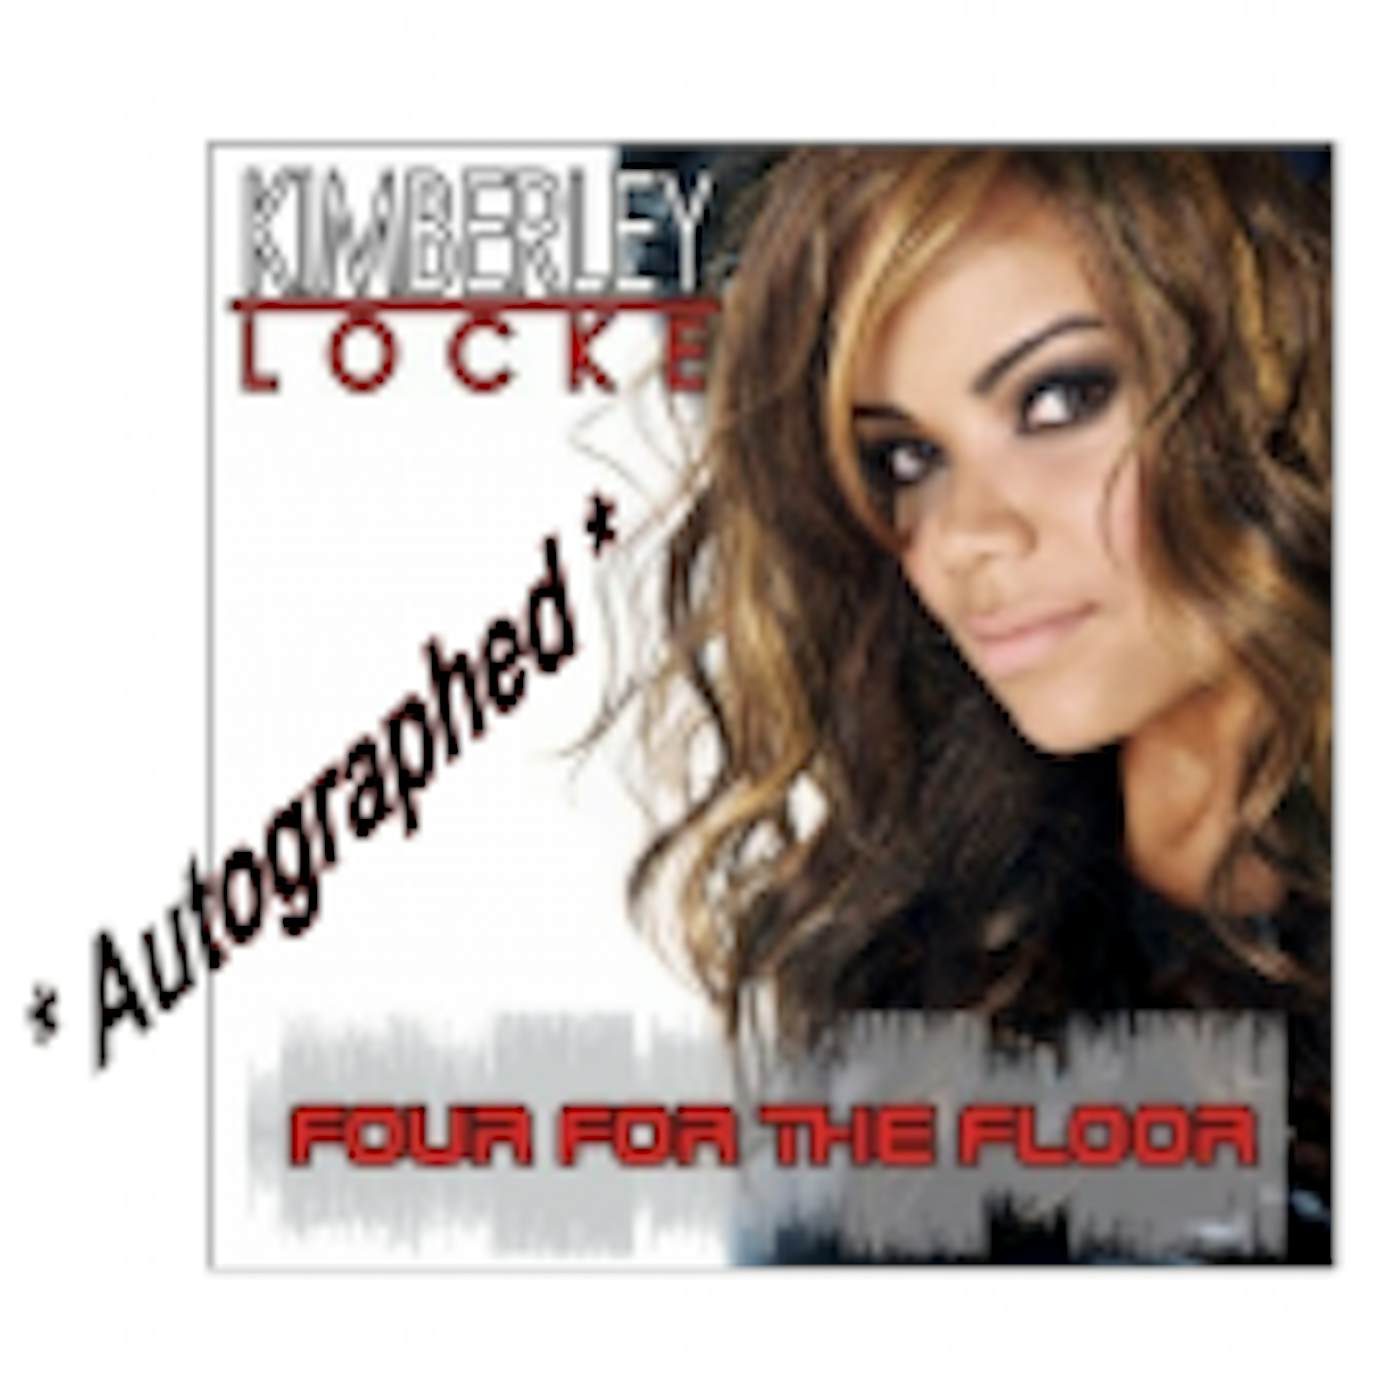 Kimberley Locke - Autographed - EP- Four For The Floor (Vinyl)